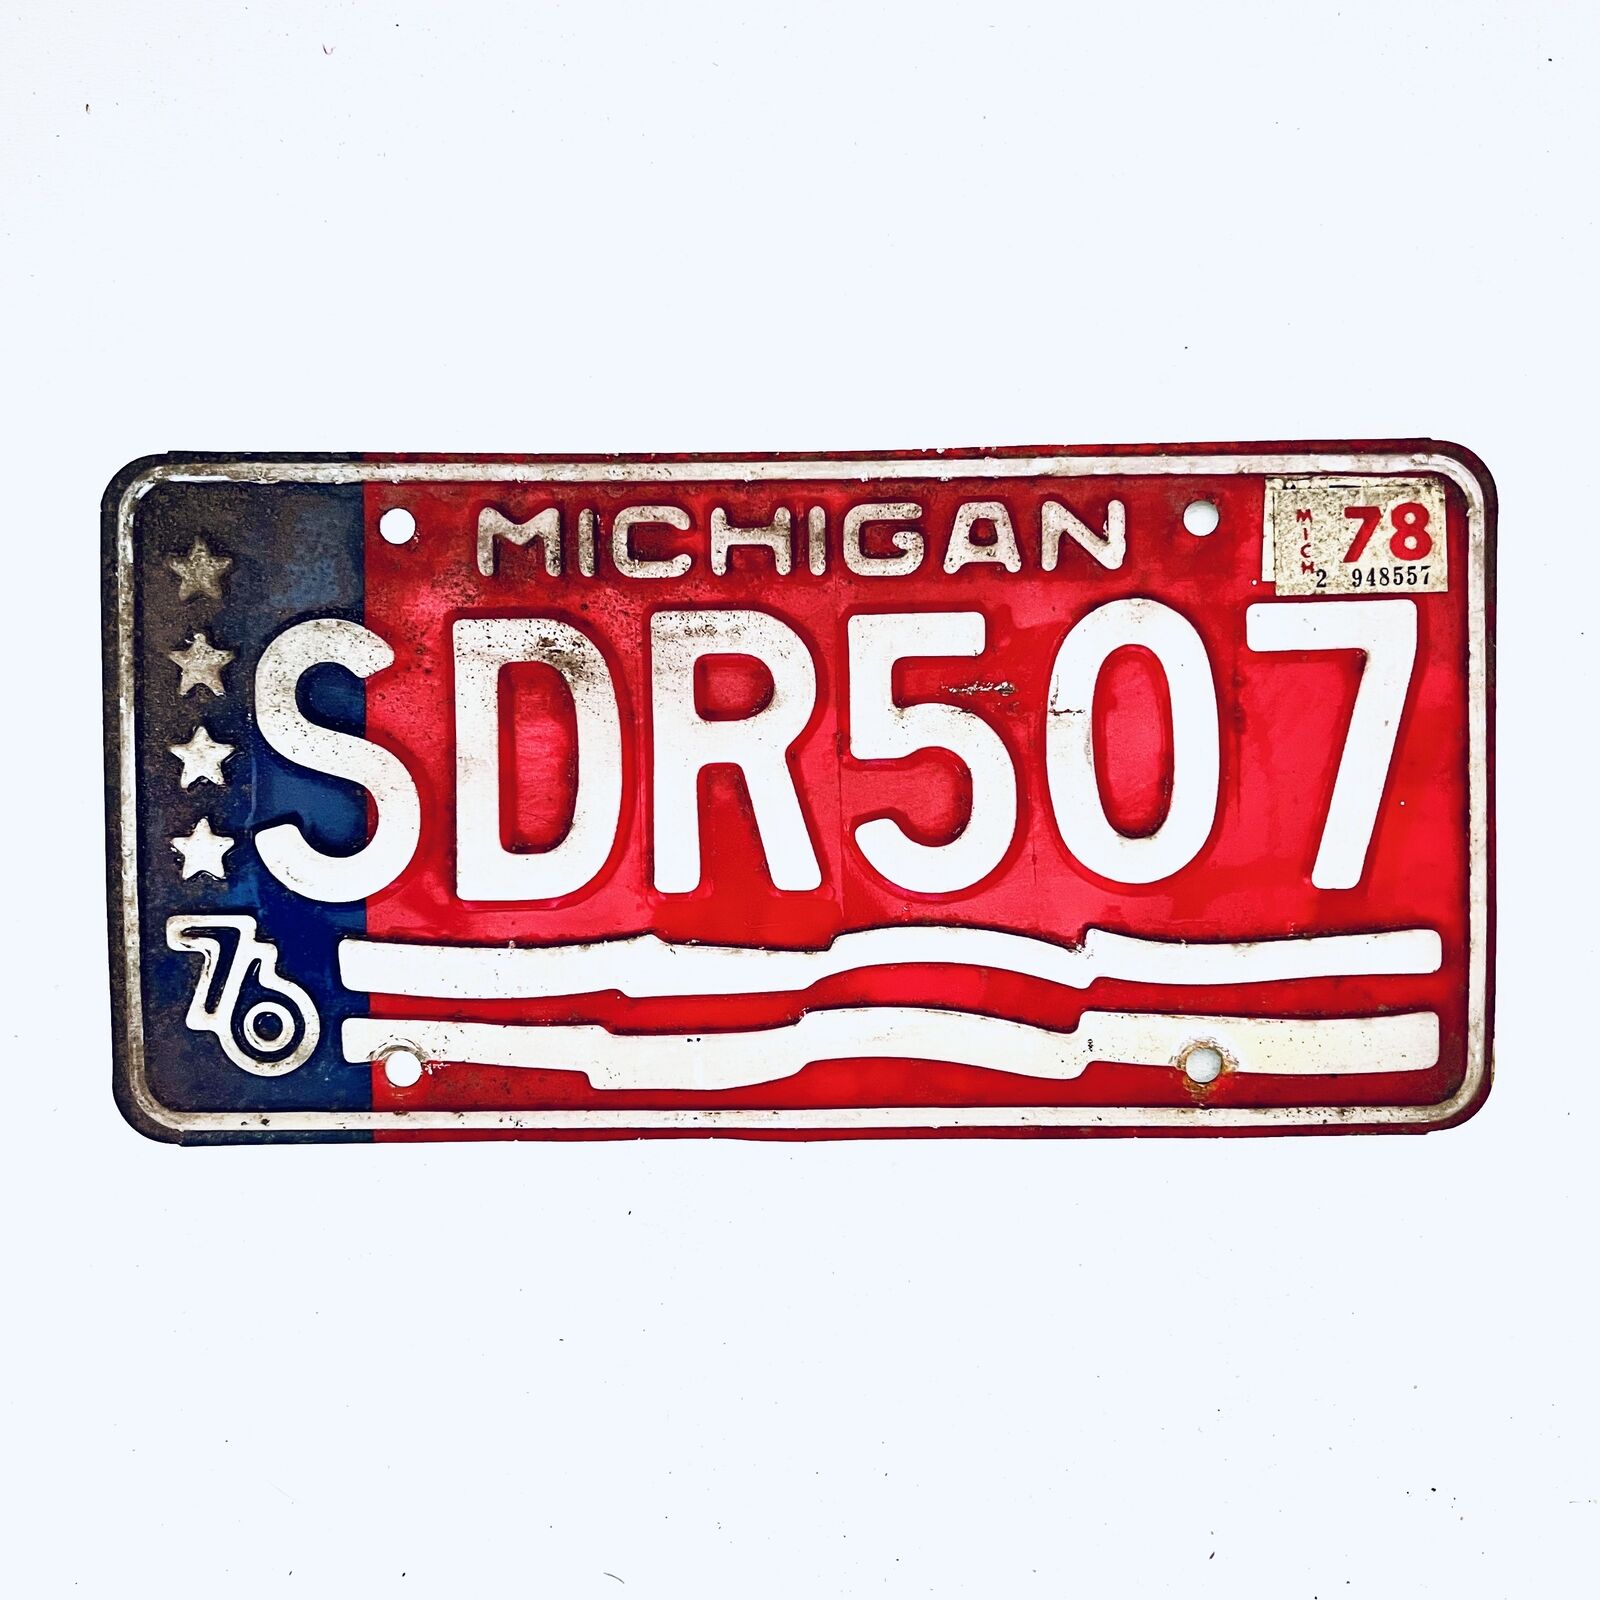 1978 United States Michigan Bicentennial Passenger License Plate Sdr 507